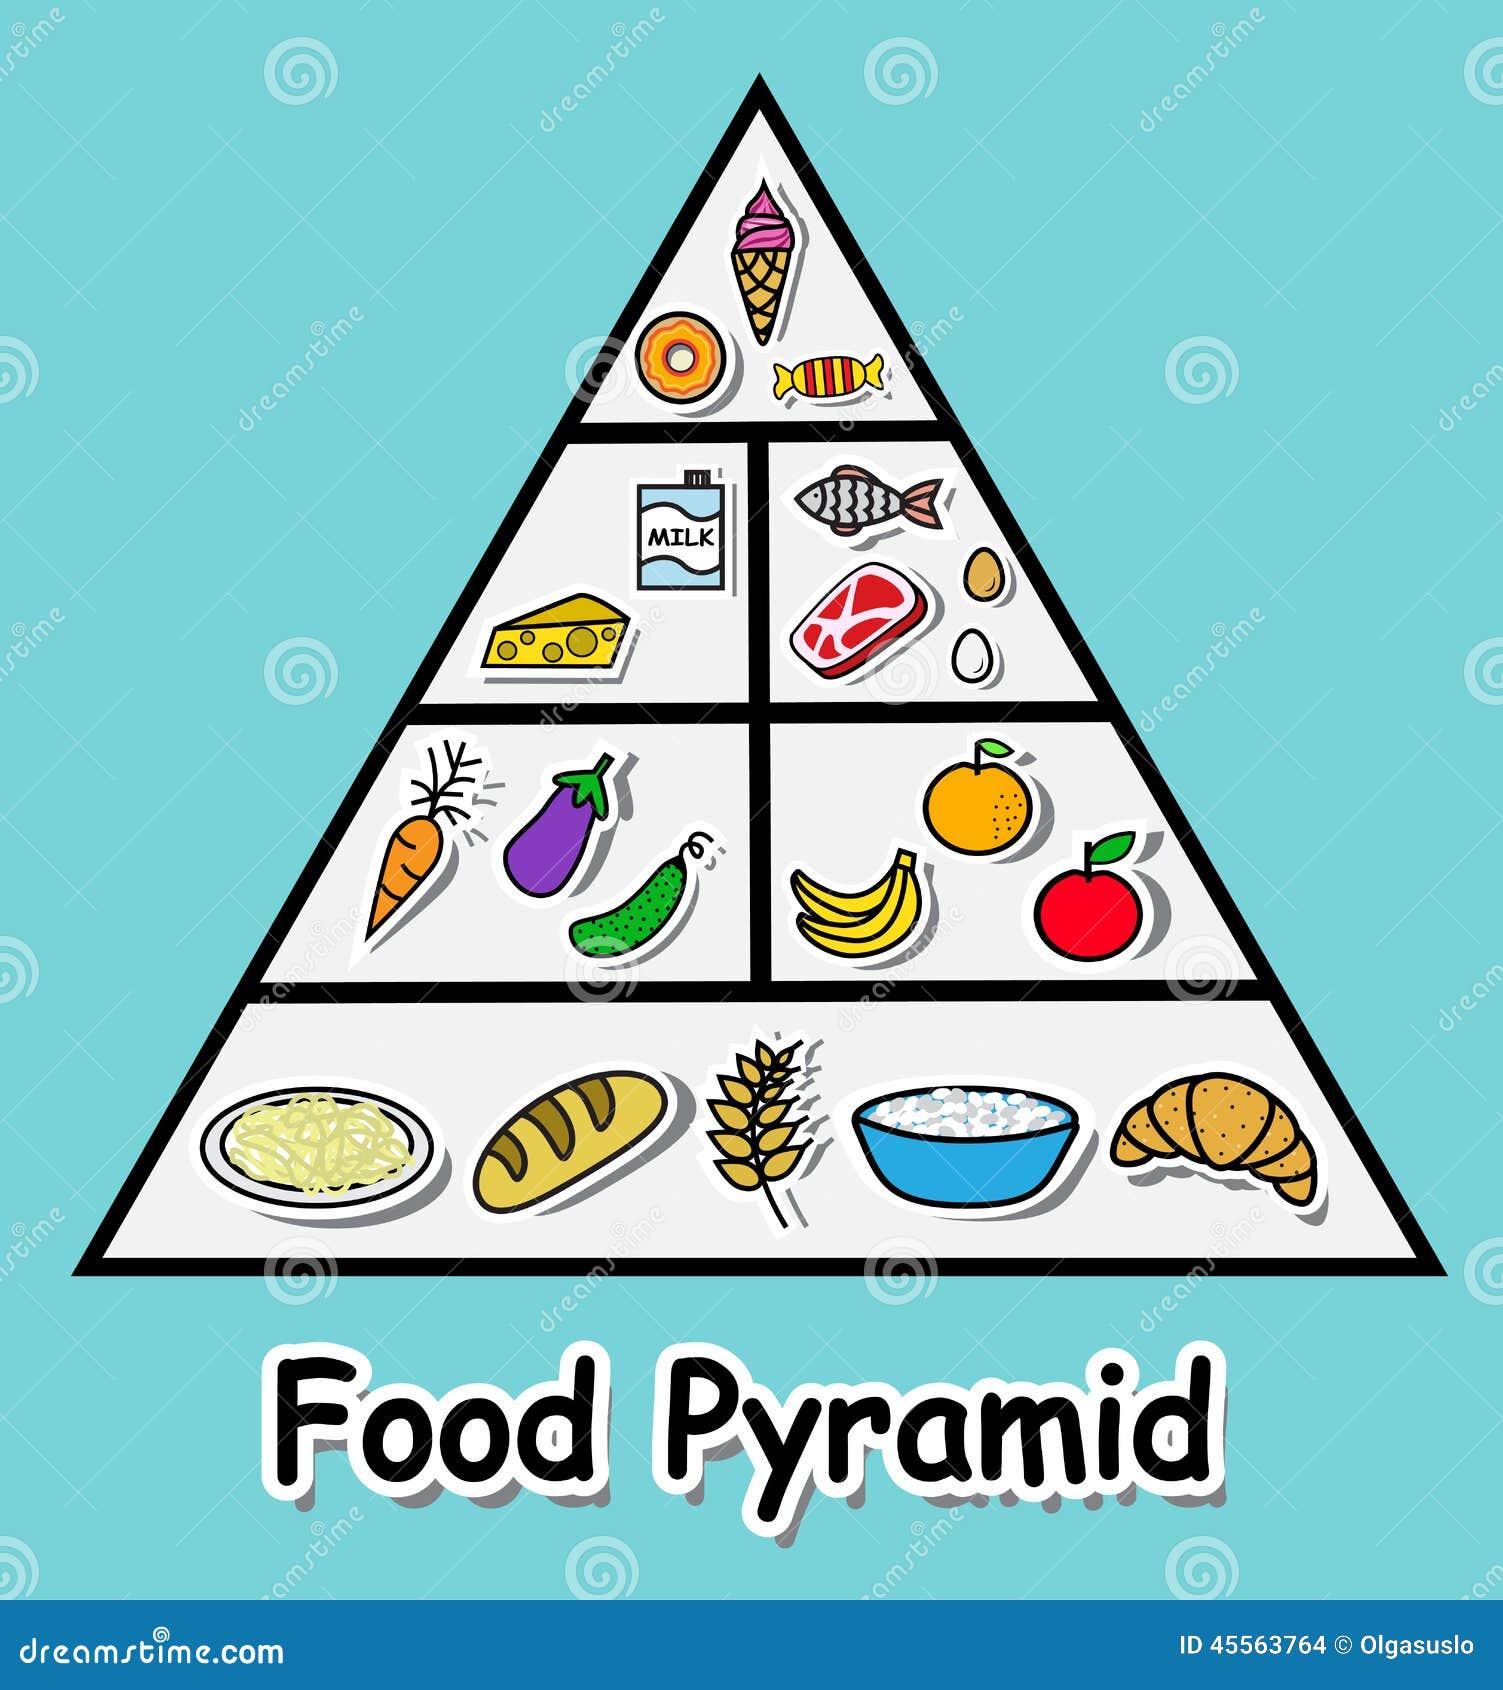 Food Pyramid Stock Vector - Image: 45563764